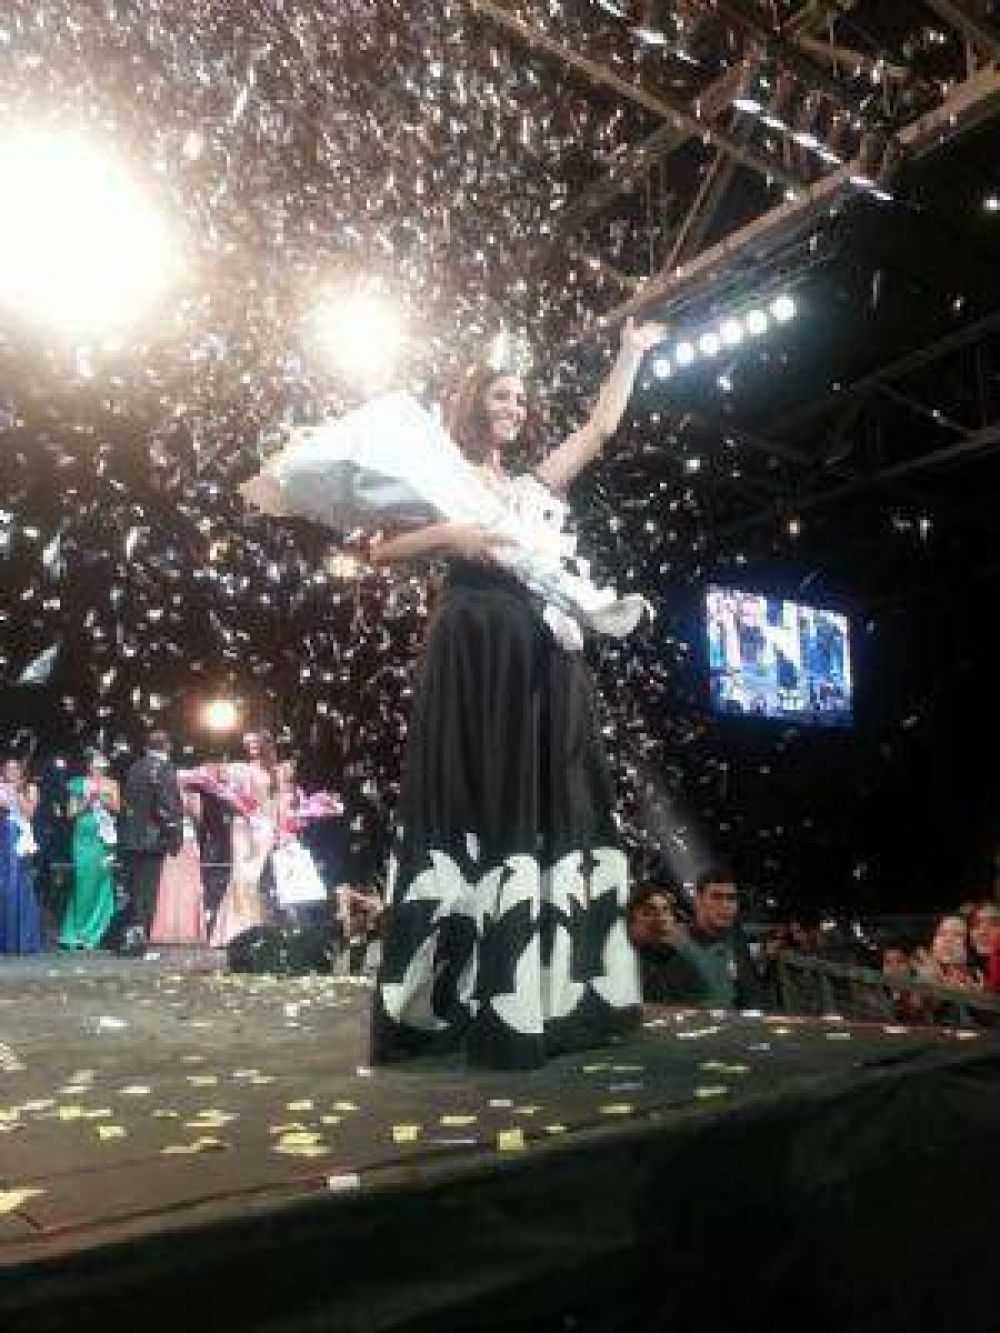 Antonella Ta fue elegida Reina de la Fiesta del Poncho 2014